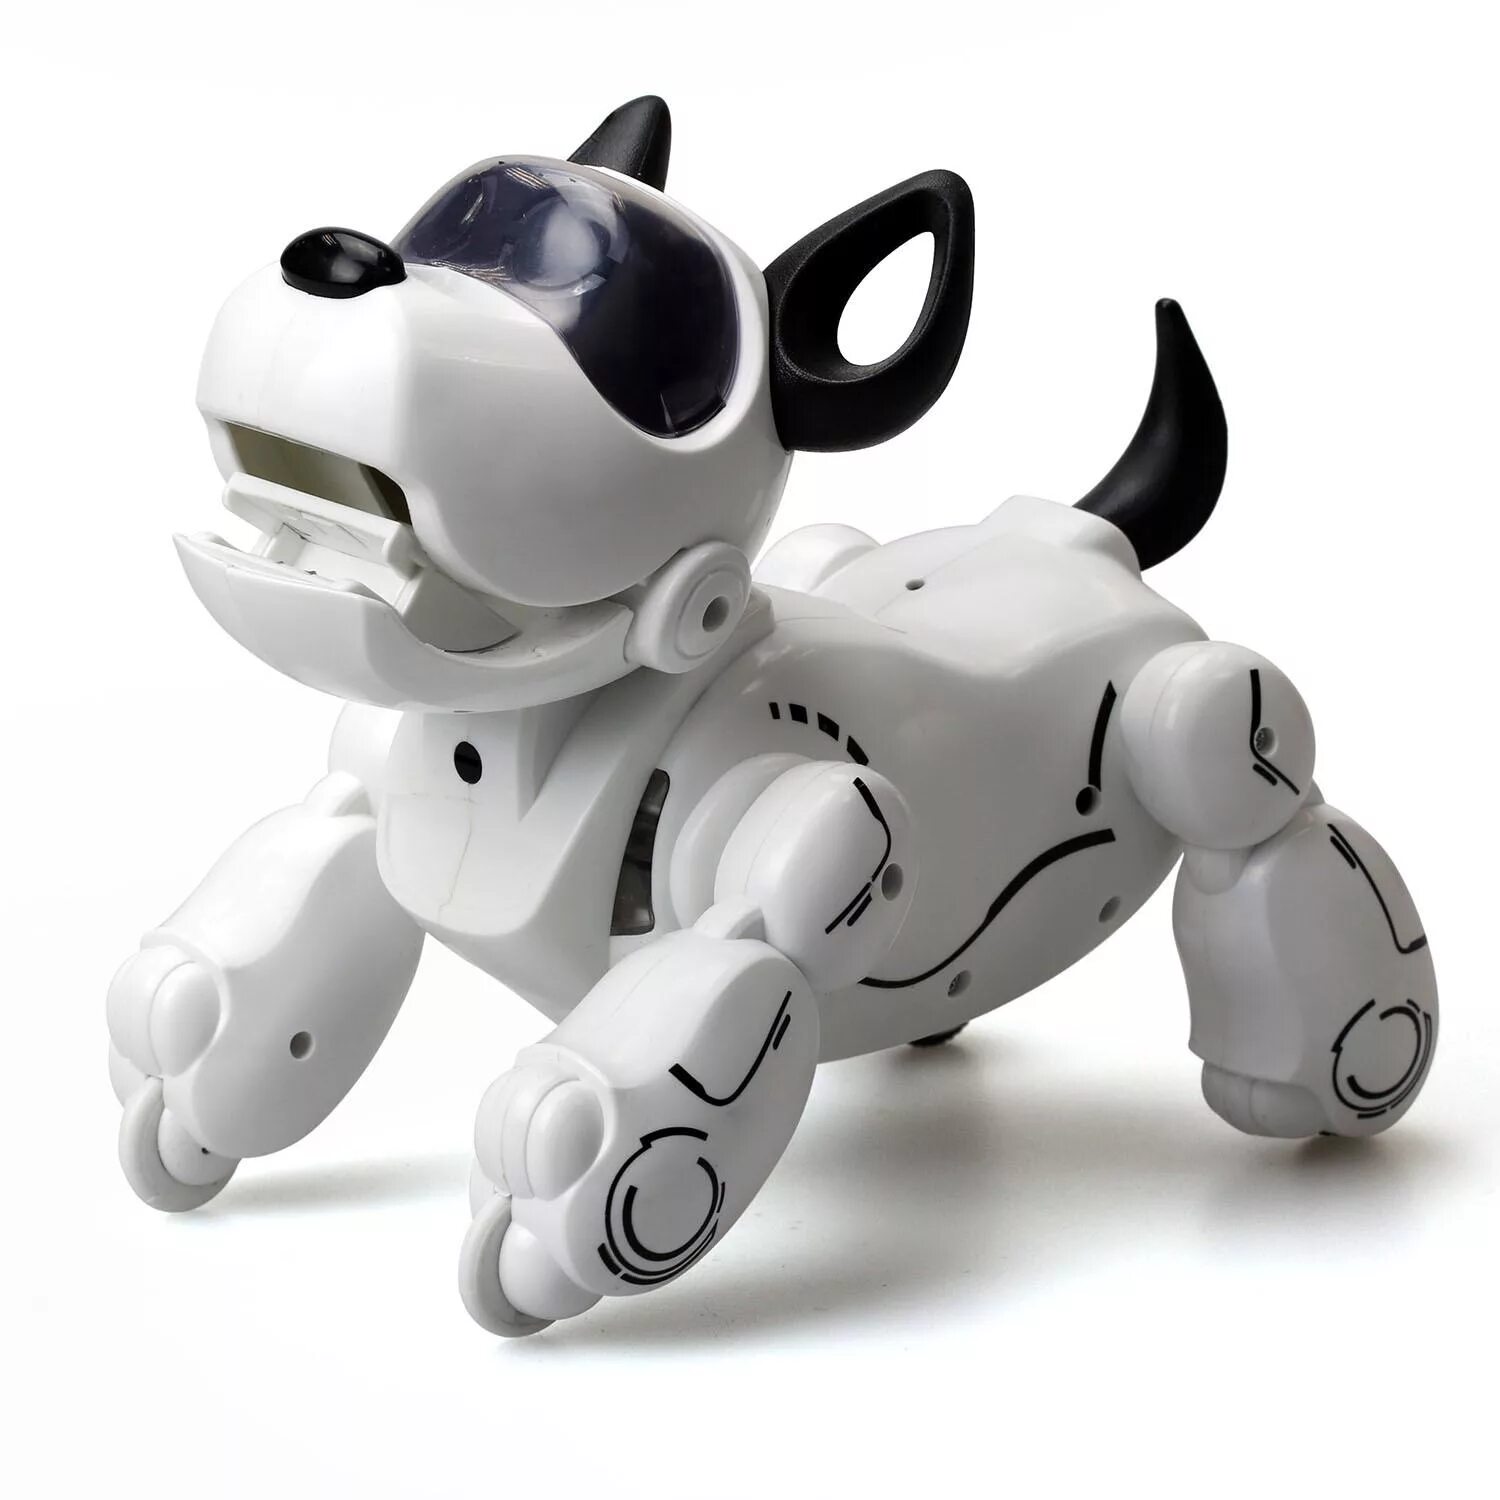 Игрушка Silverlit PUPBO собака. Робот Silverlit собака PUPBO. Робот Silverlit собака Дюк. Собака робот Silverlit PUPBO 88520. Роботы собаки на открытии игр